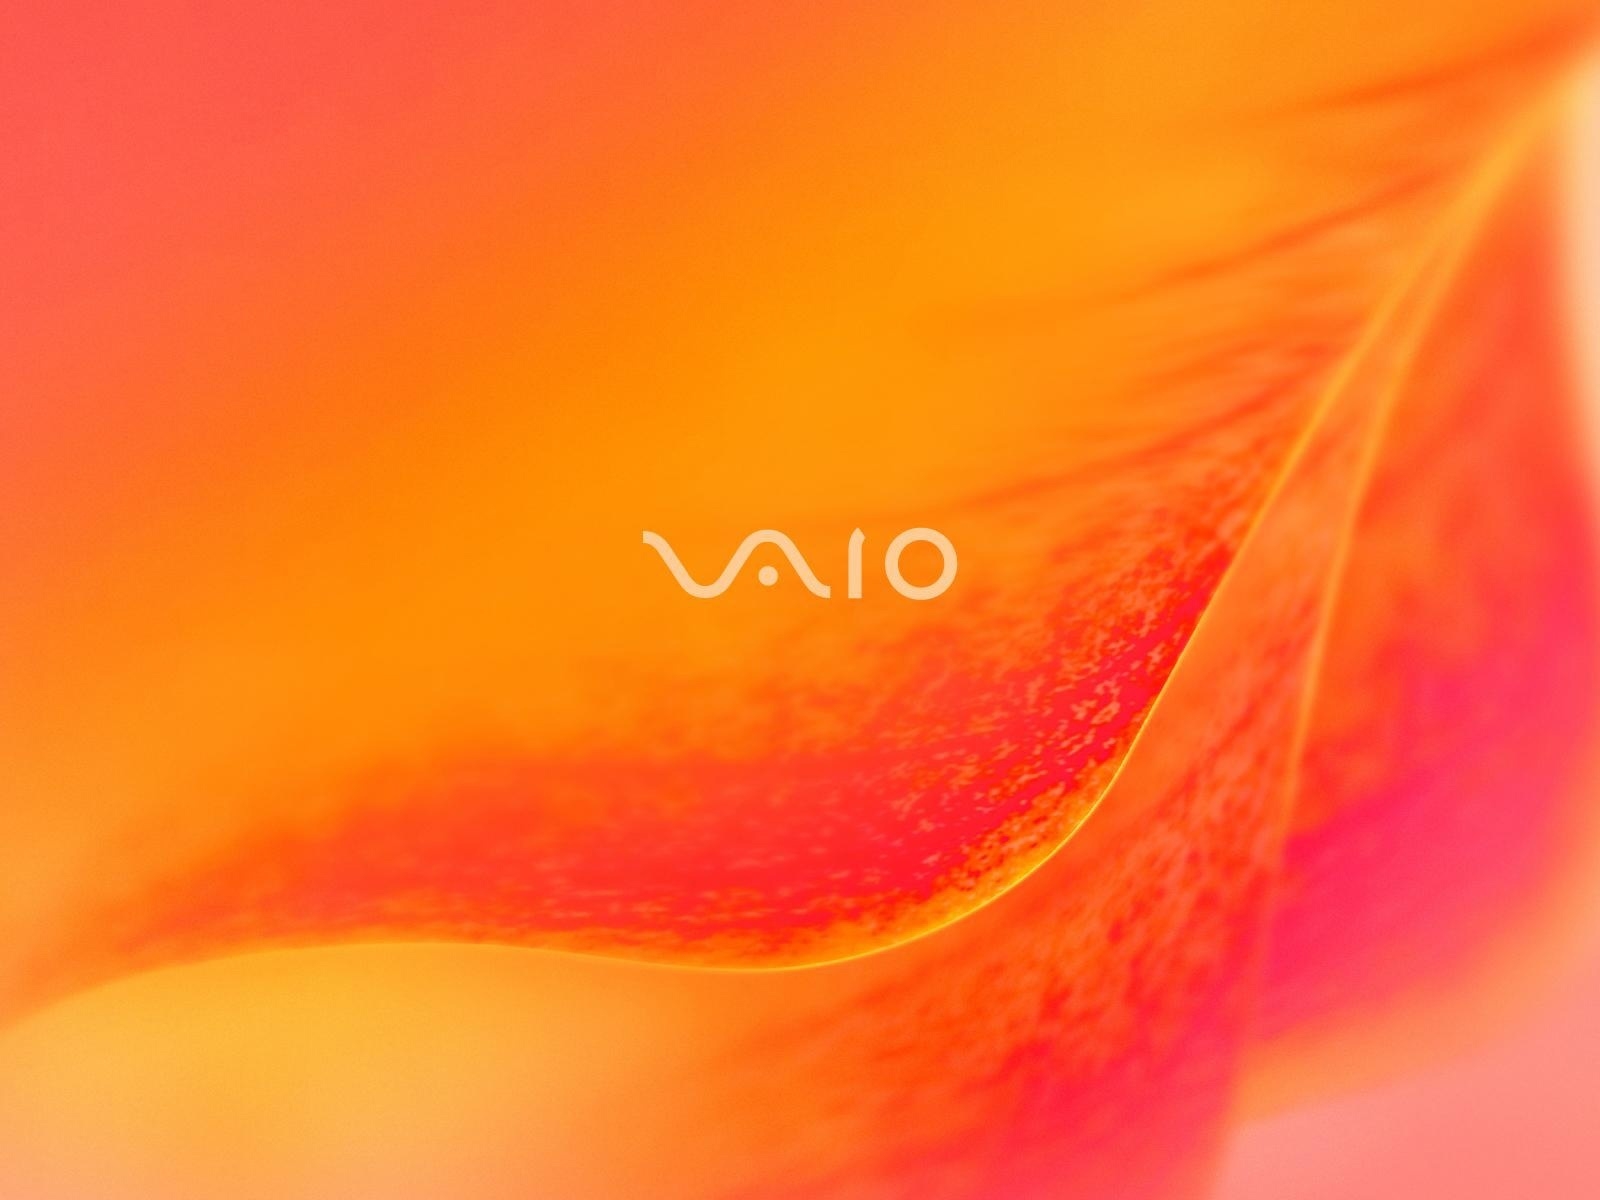 Sony Vaio Orange blossom for 1600 x 1200 resolution